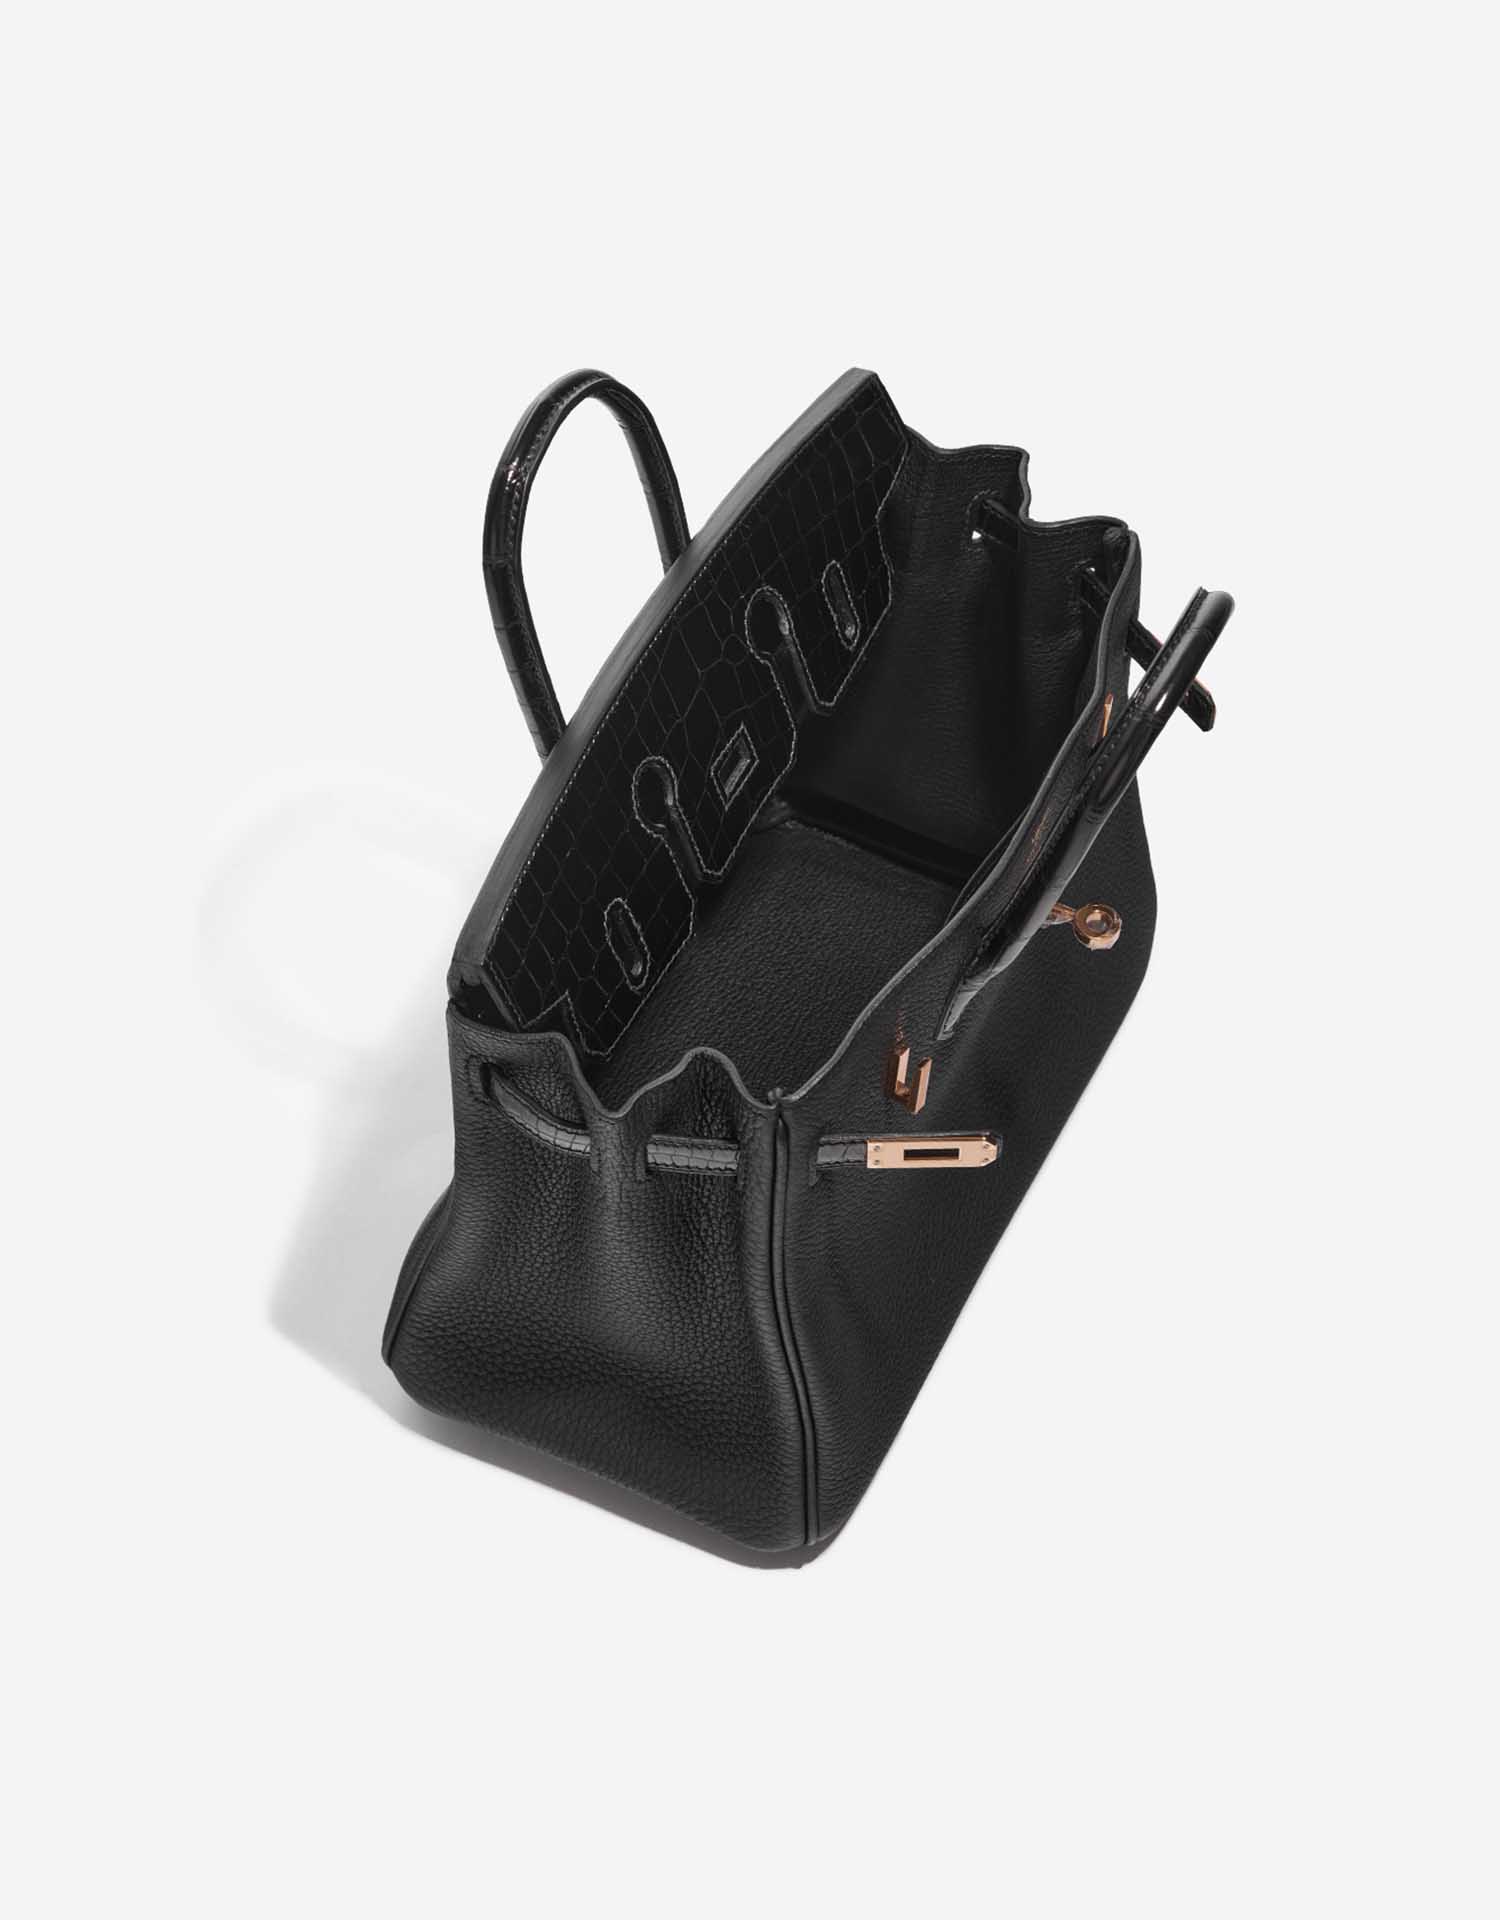 Hermes Birkin Touch 25 Black Togo Shiny Nilo Croc Handbag